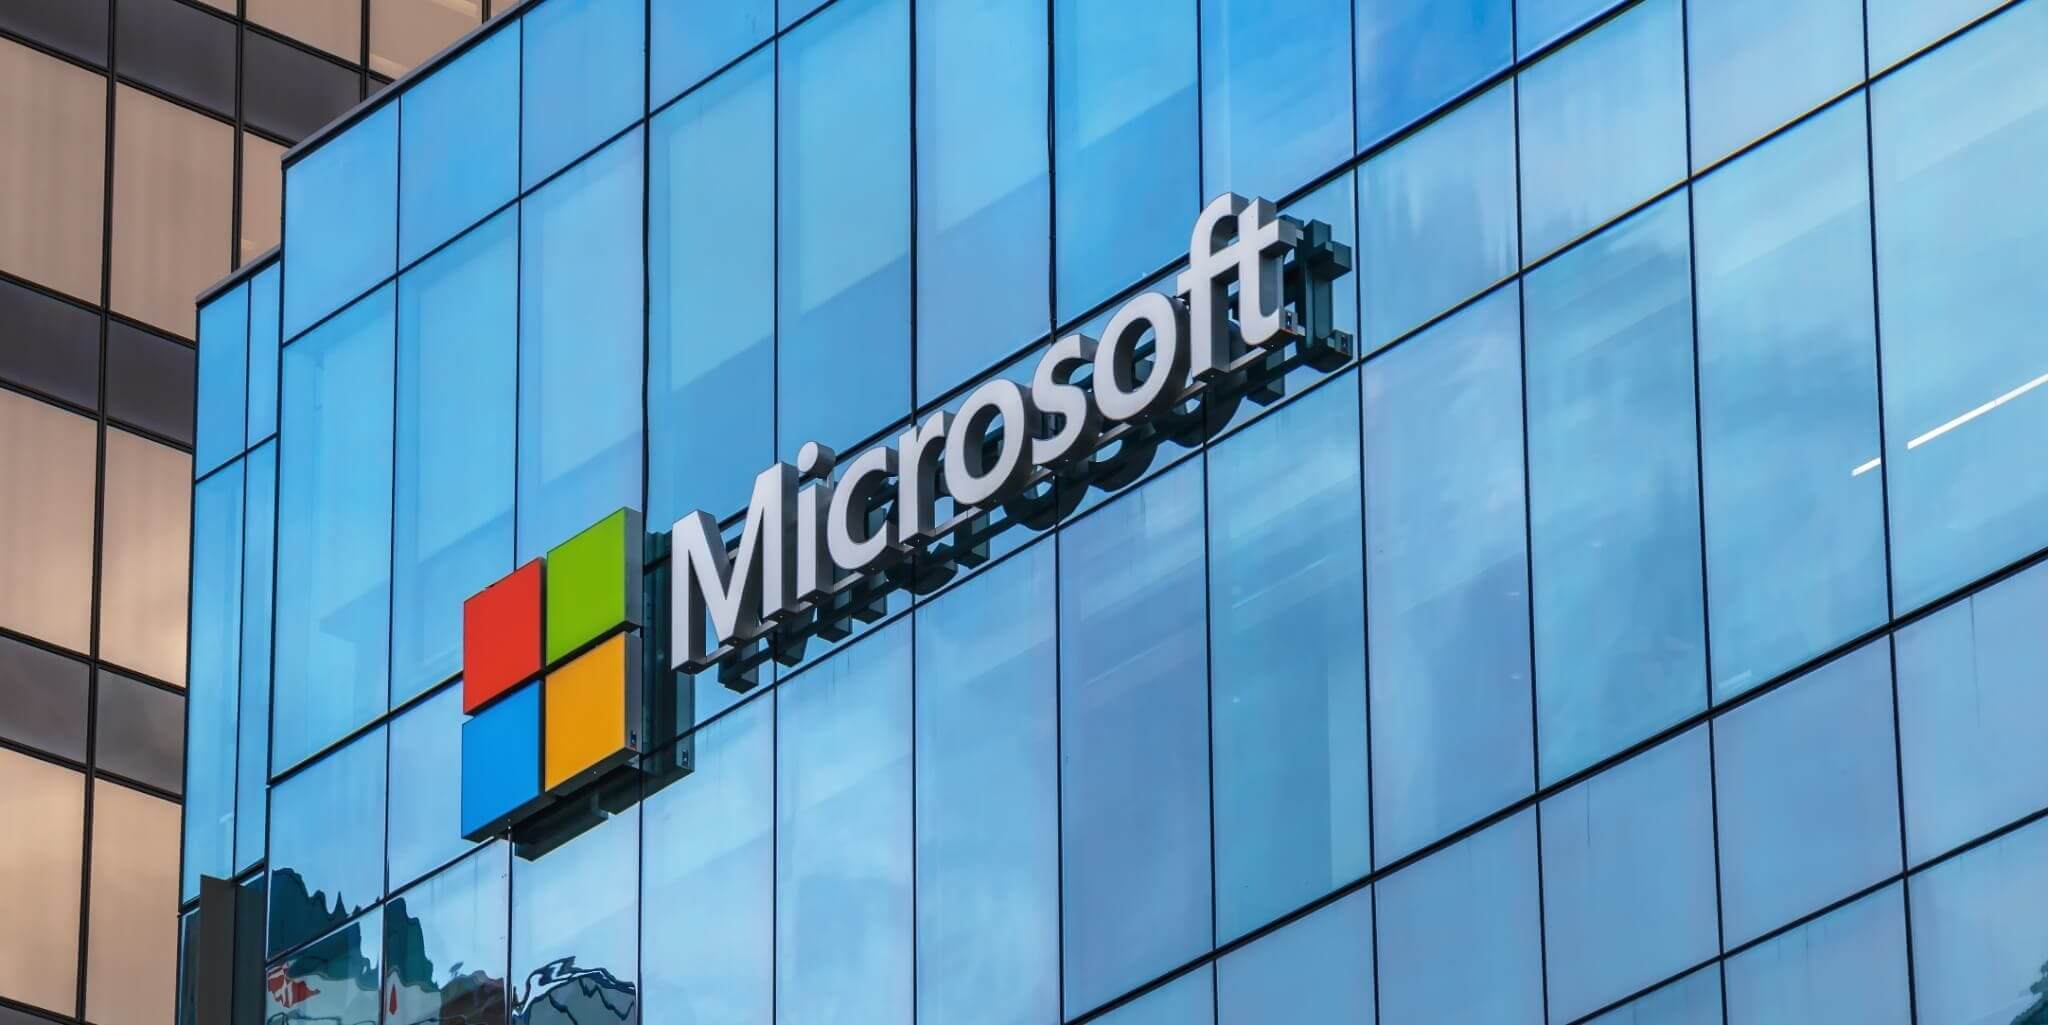 Microsoft logo design